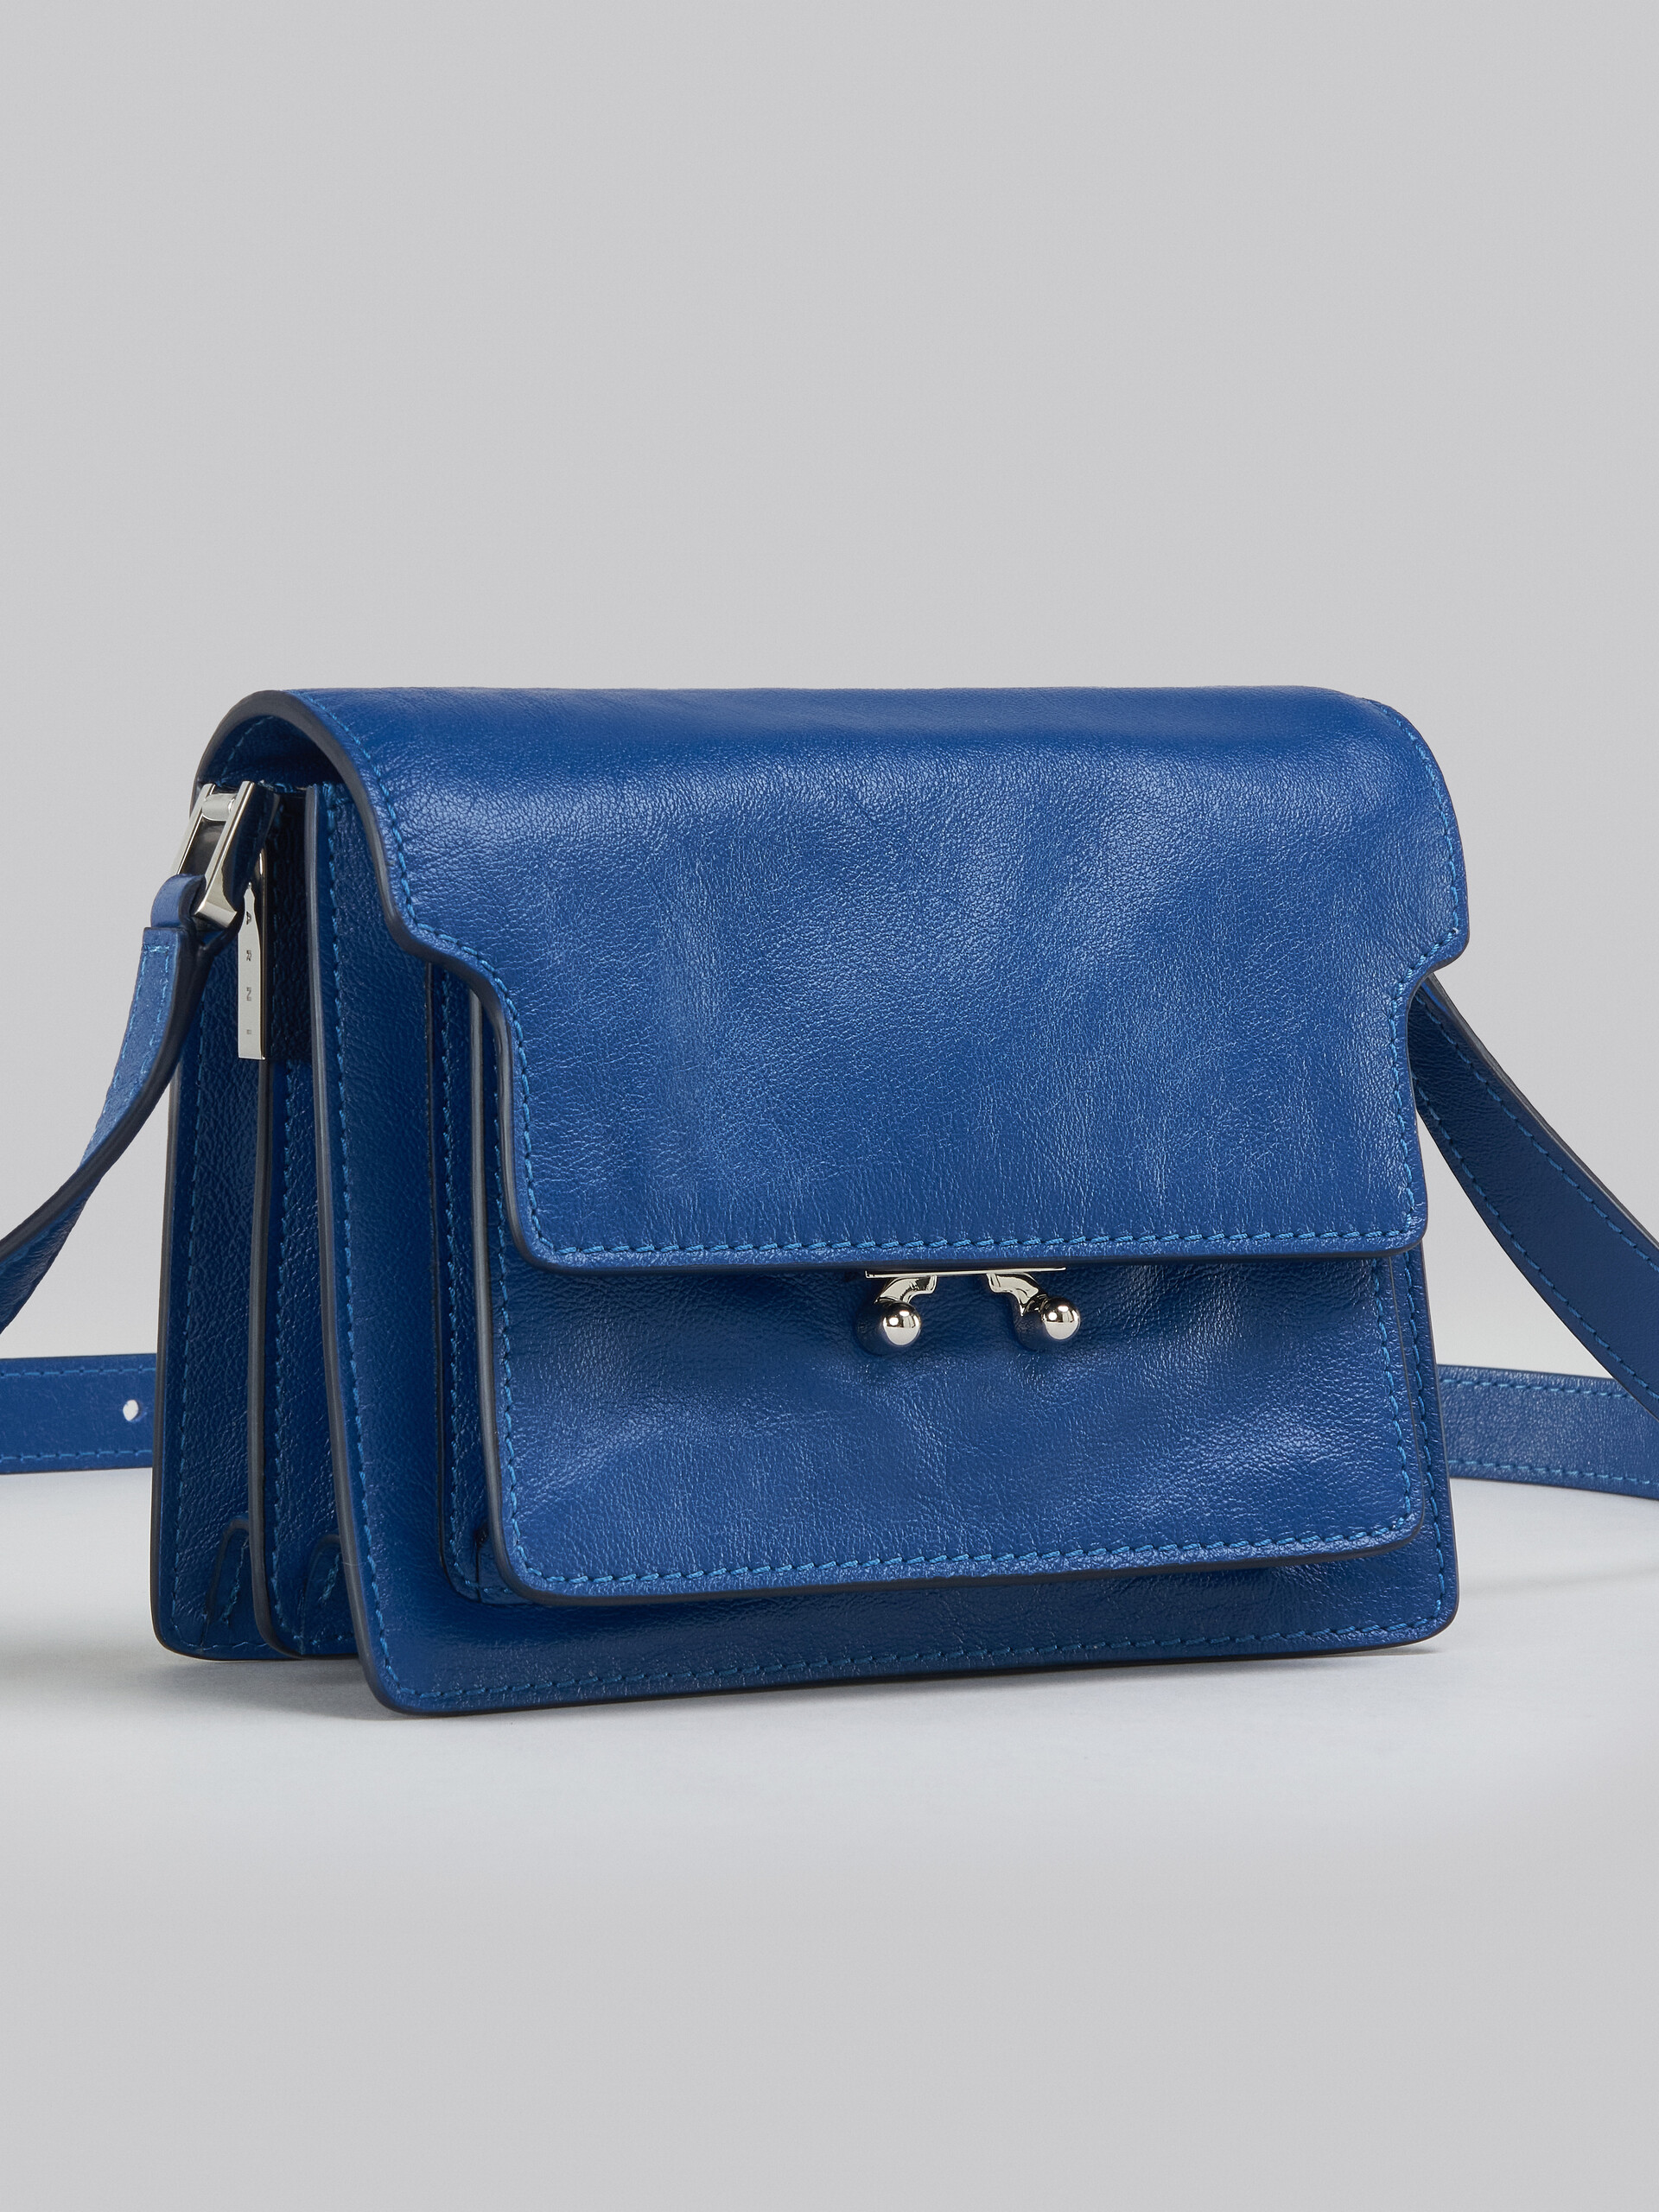 Trunk Soft Mini Bag in blue leather - Shoulder Bags - Image 5